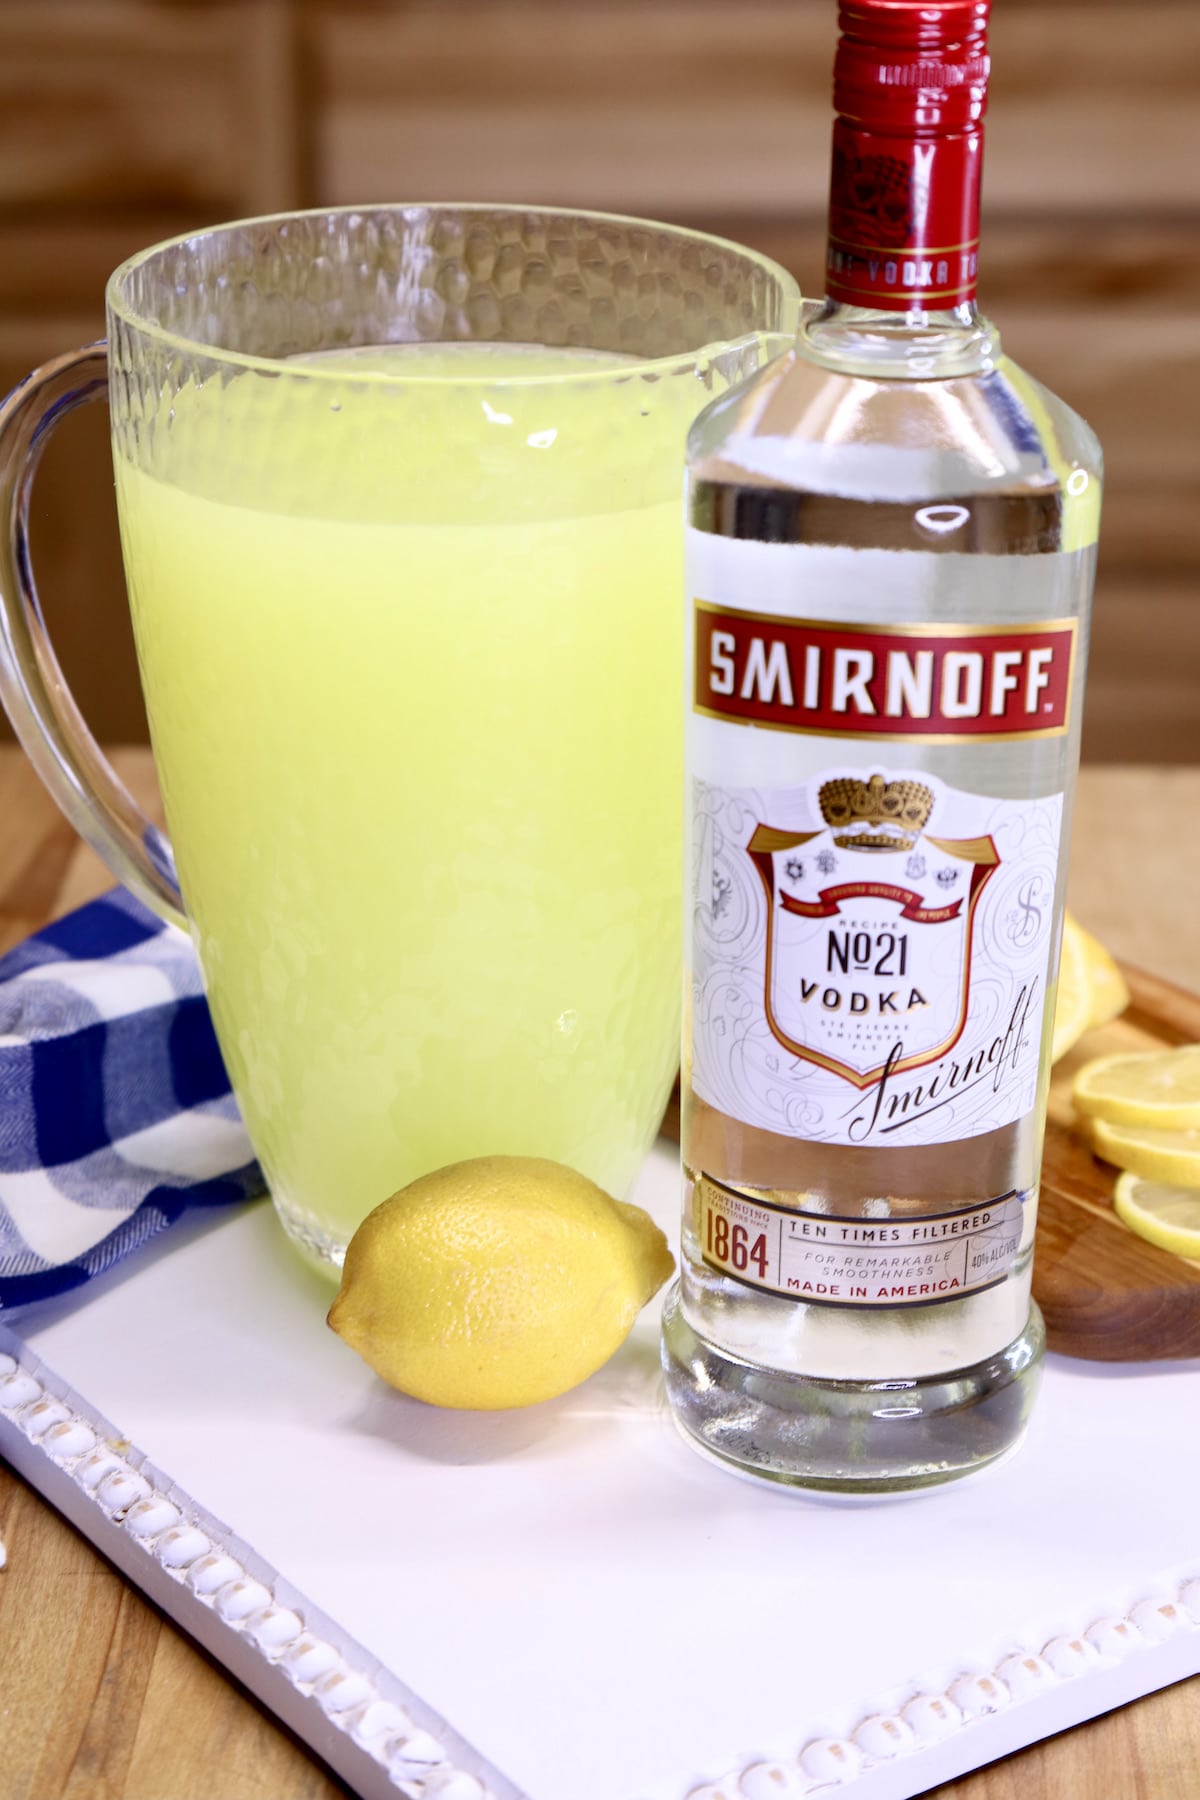 Pitcher of lemonade, bottle of Smirnoff vodka and a whole lemon on a white board.